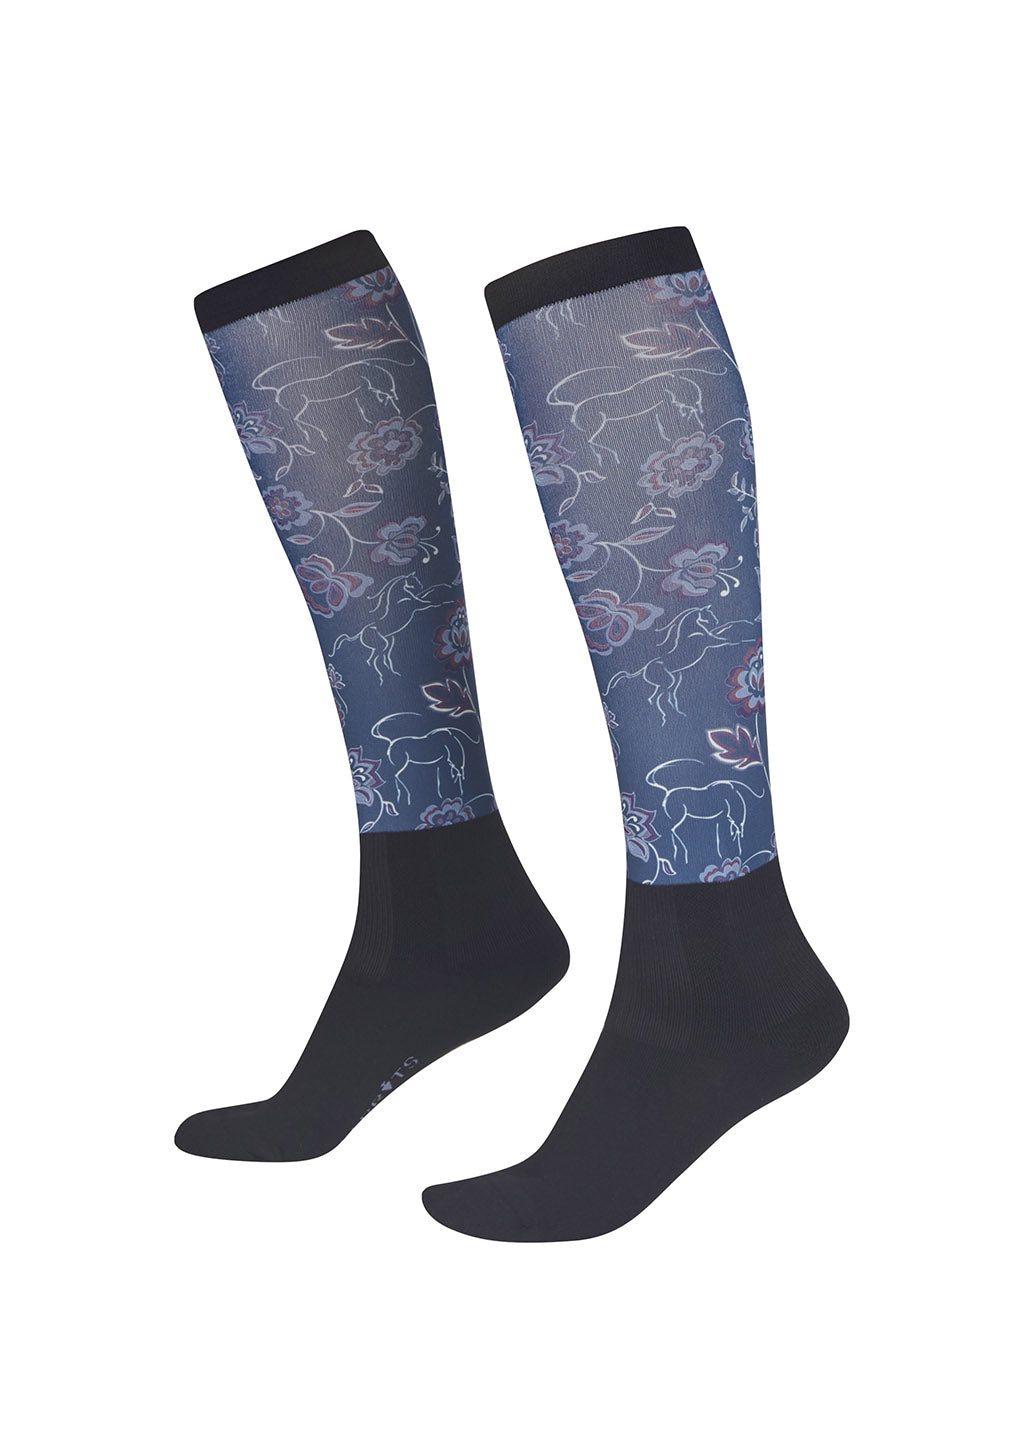 Kerrits Dual Zone Boot Socks F'22 Prints